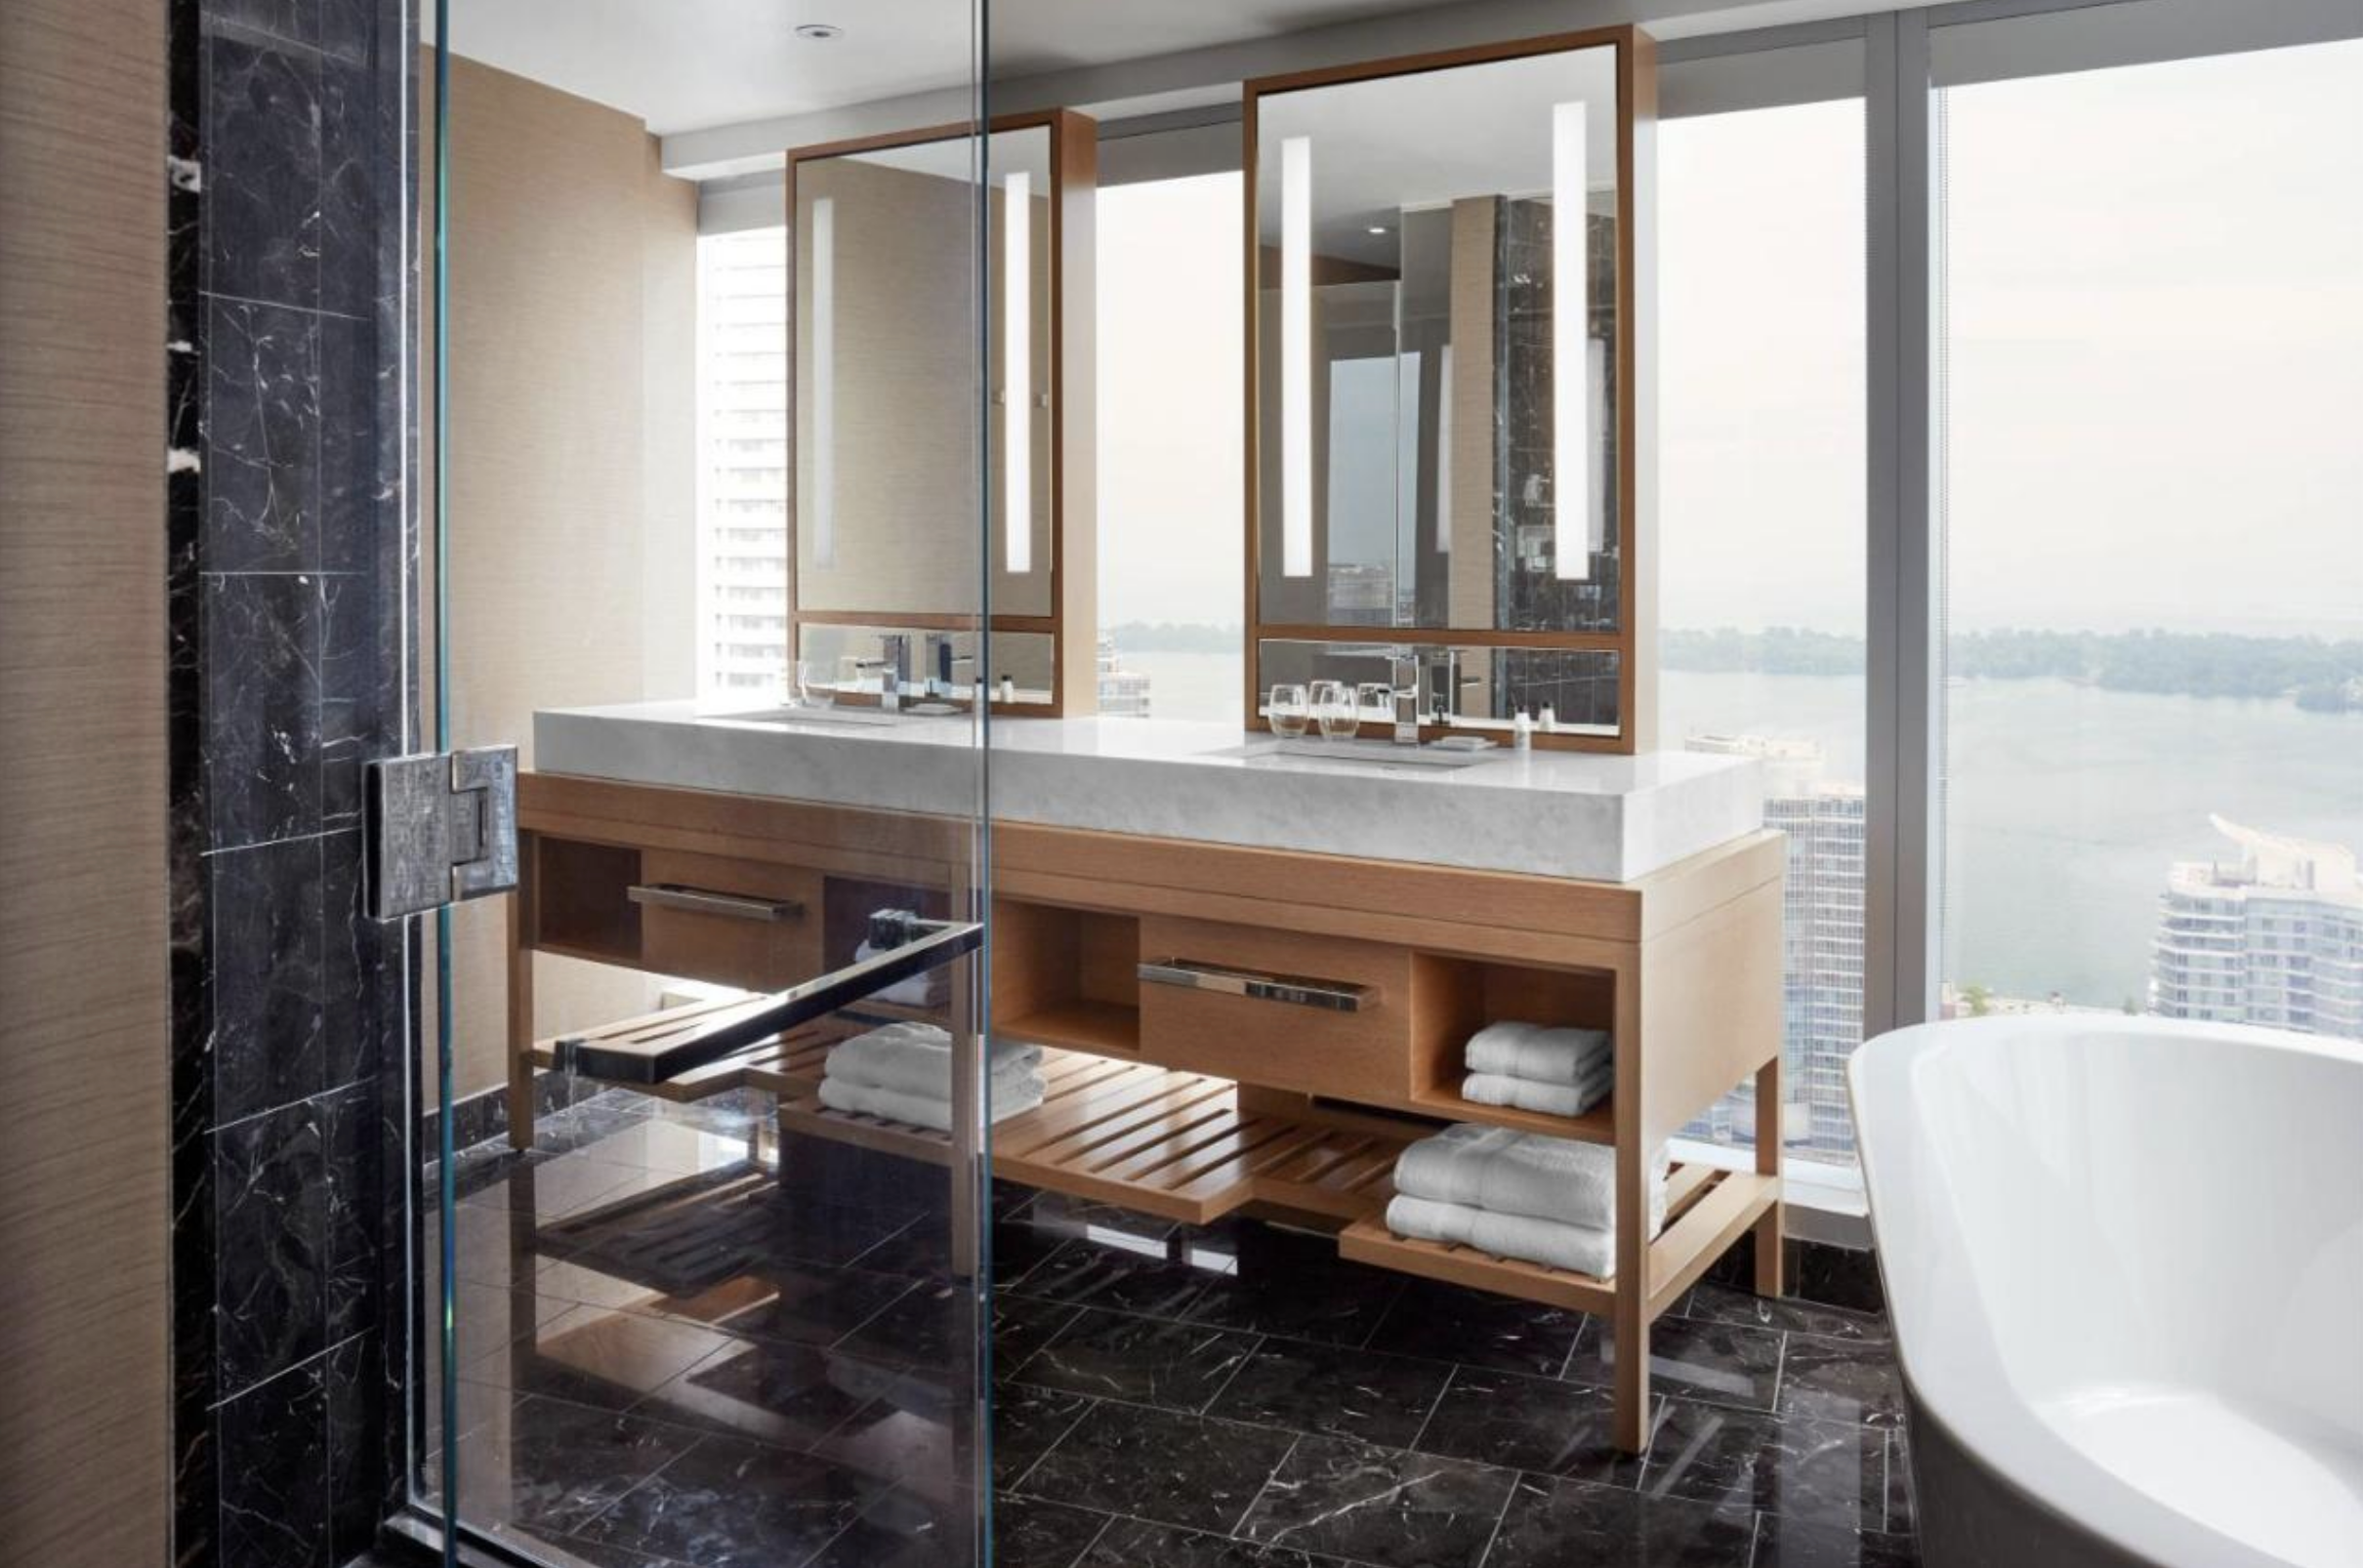 2. Delta Hotels by Marriott Toronto - Corner King Room with Deep Soaking Bathtub